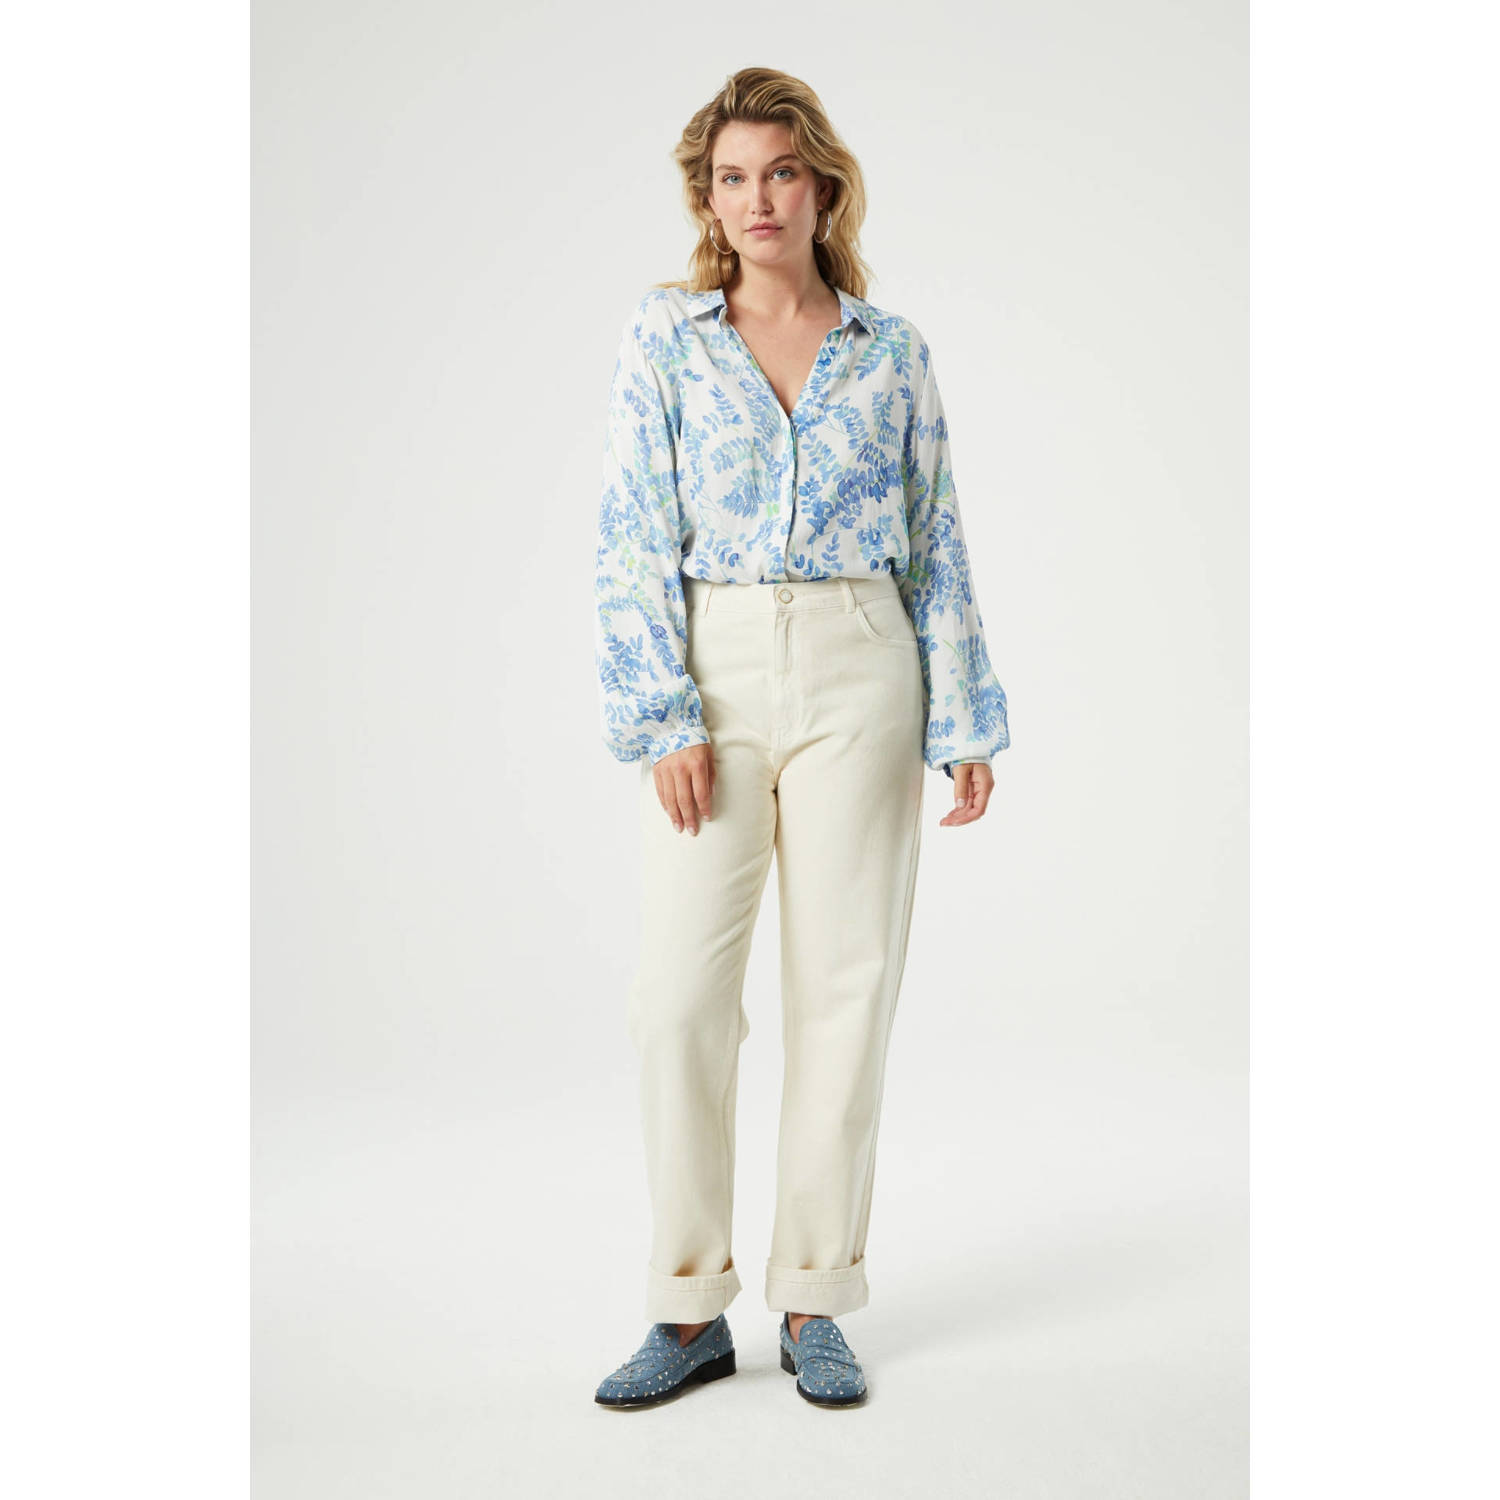 Fabienne Chapot blouse Liv met all over print blauw wit groen